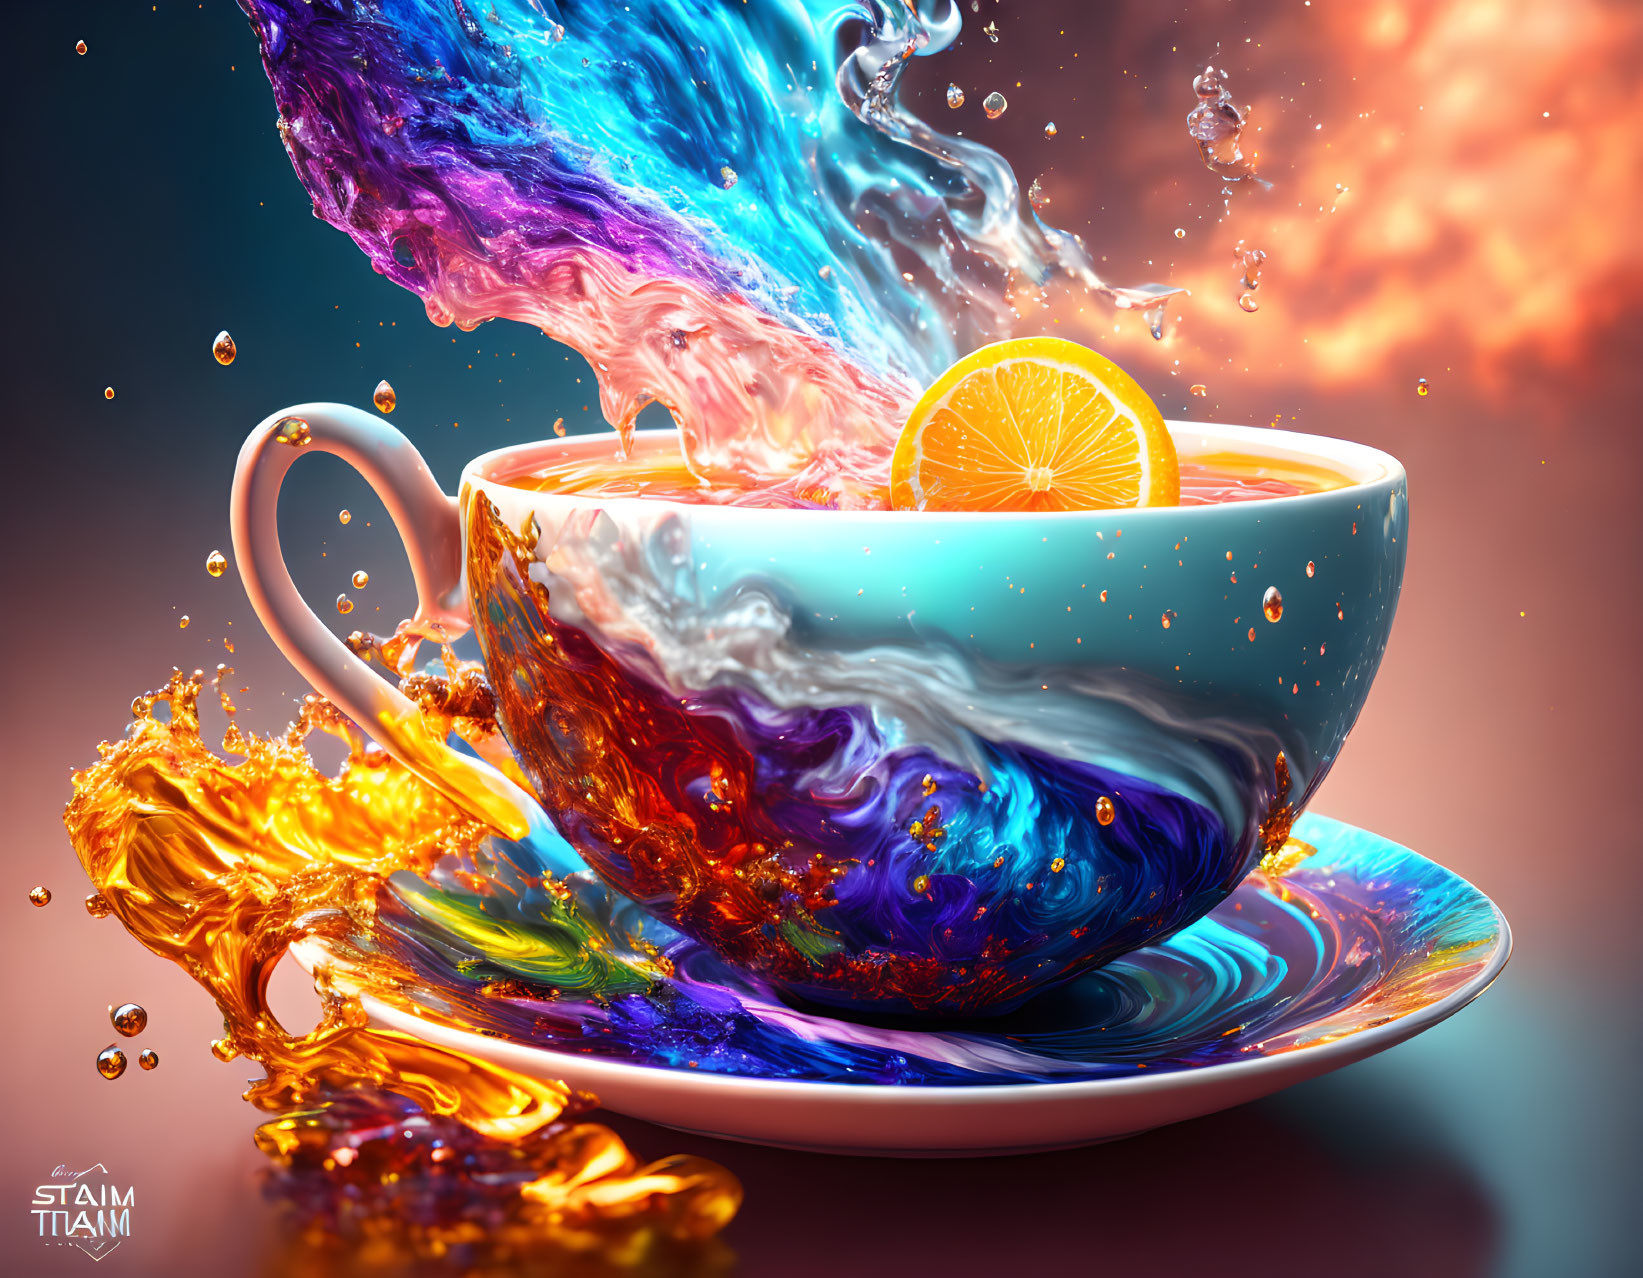 Storm in a tea cup